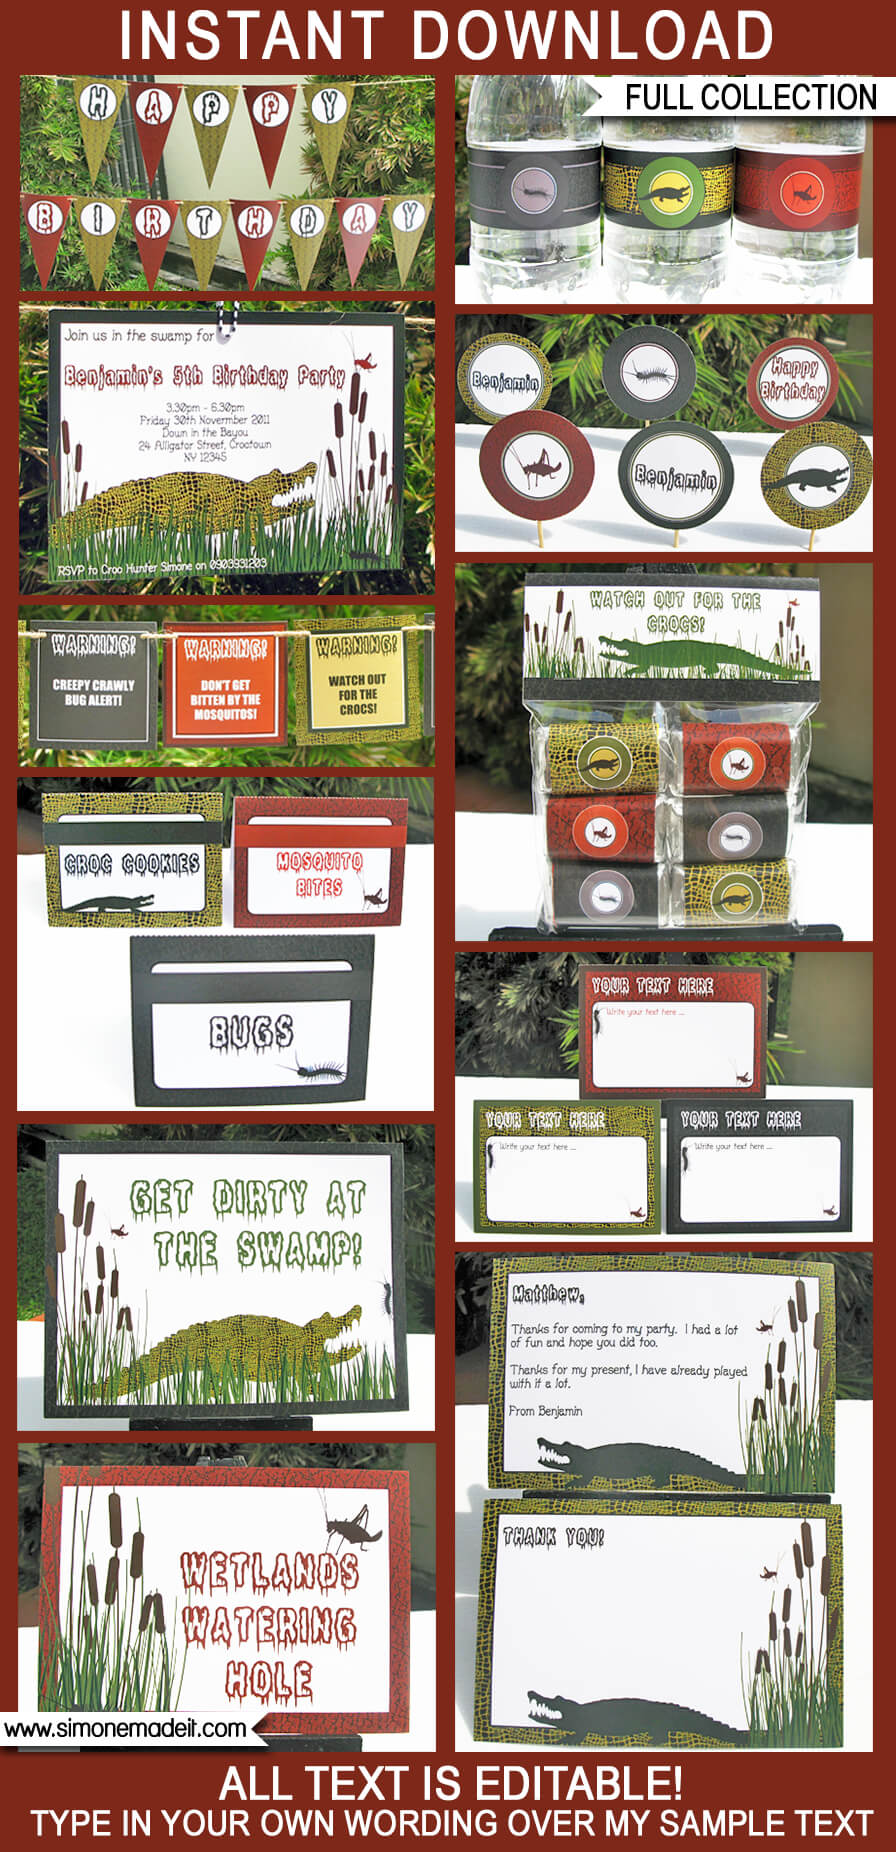 Swamp Party Printables, Invitations & Decorations | Editable Birthday Party Theme templates | INSTANT DOWNLOAD $12.50 via SIMONEmadeit.com